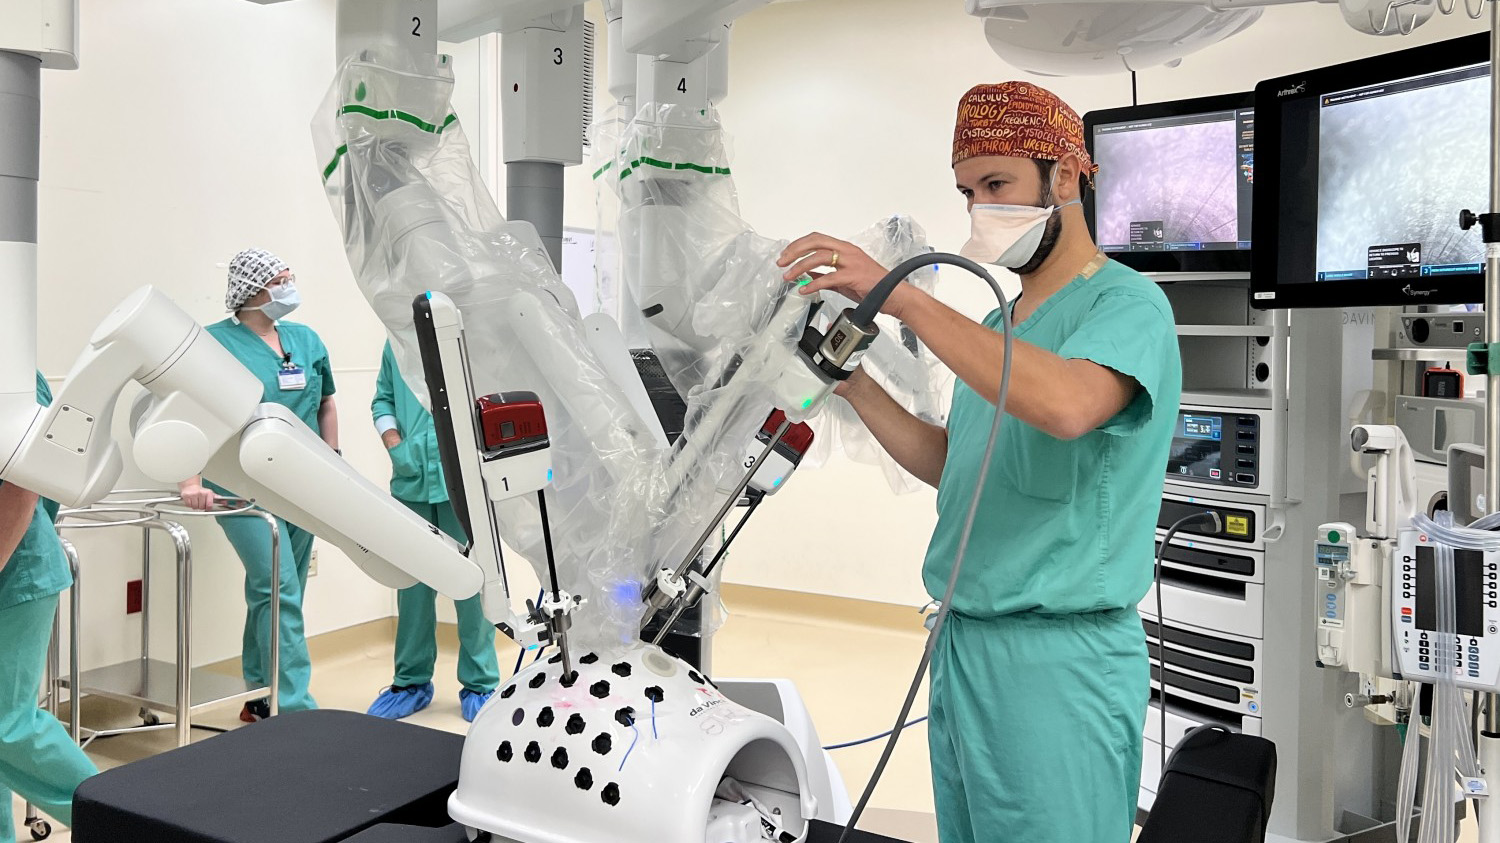 Dr Soares Kishwaukee robotic surgery